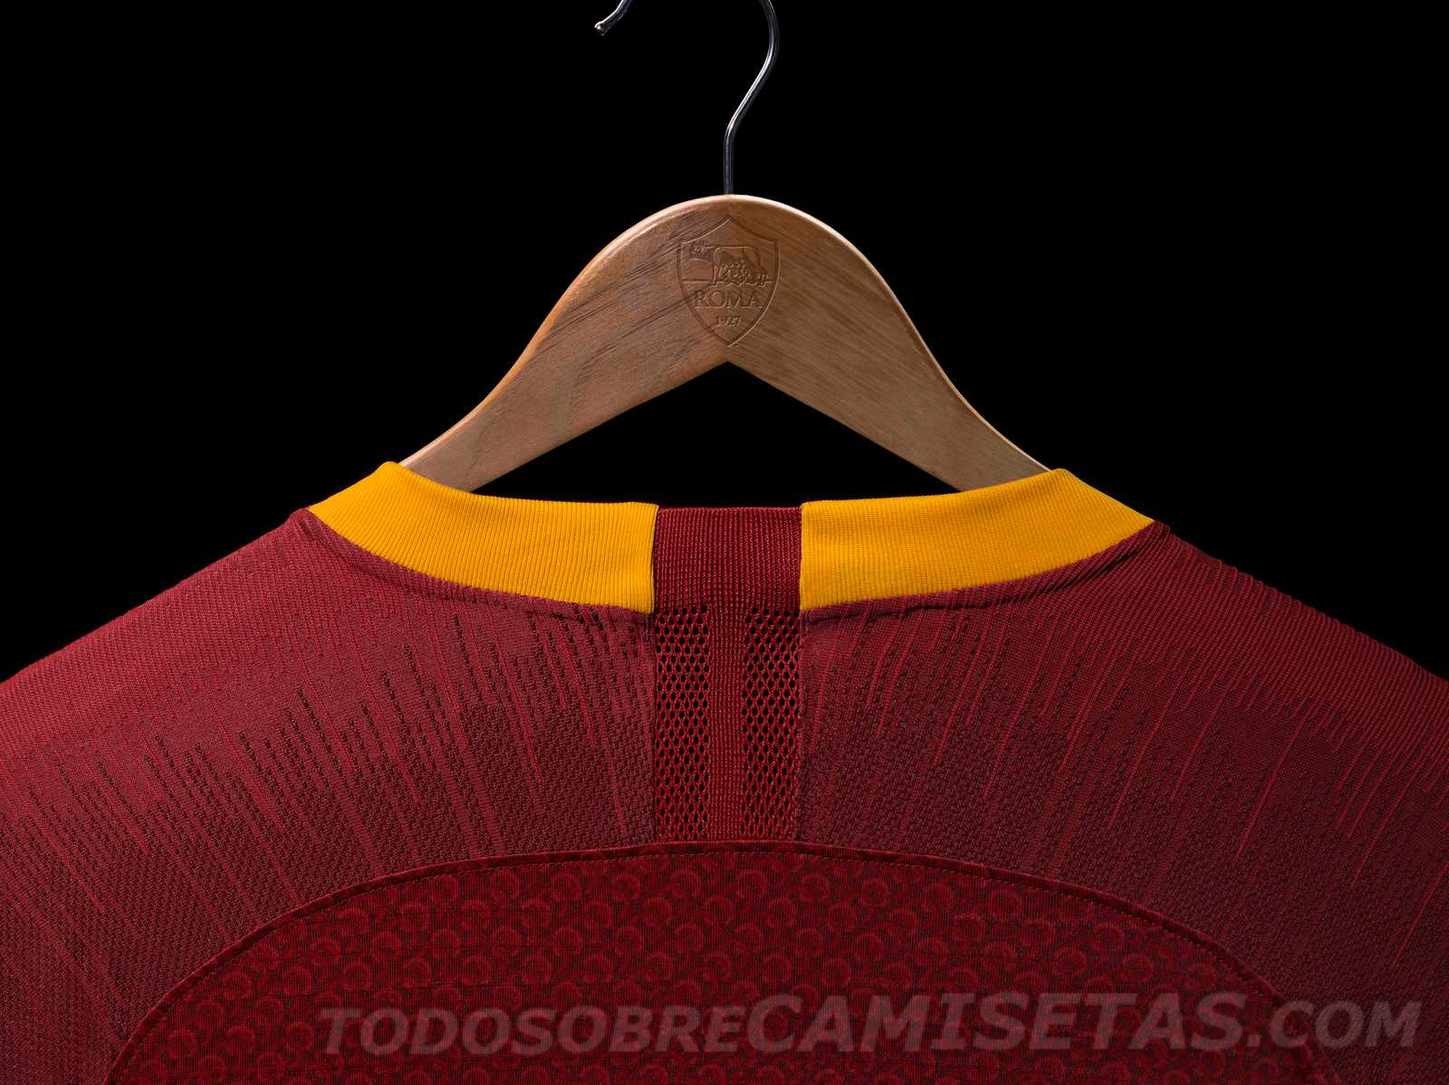 AS Roma 2018-19 Nike Home Kit